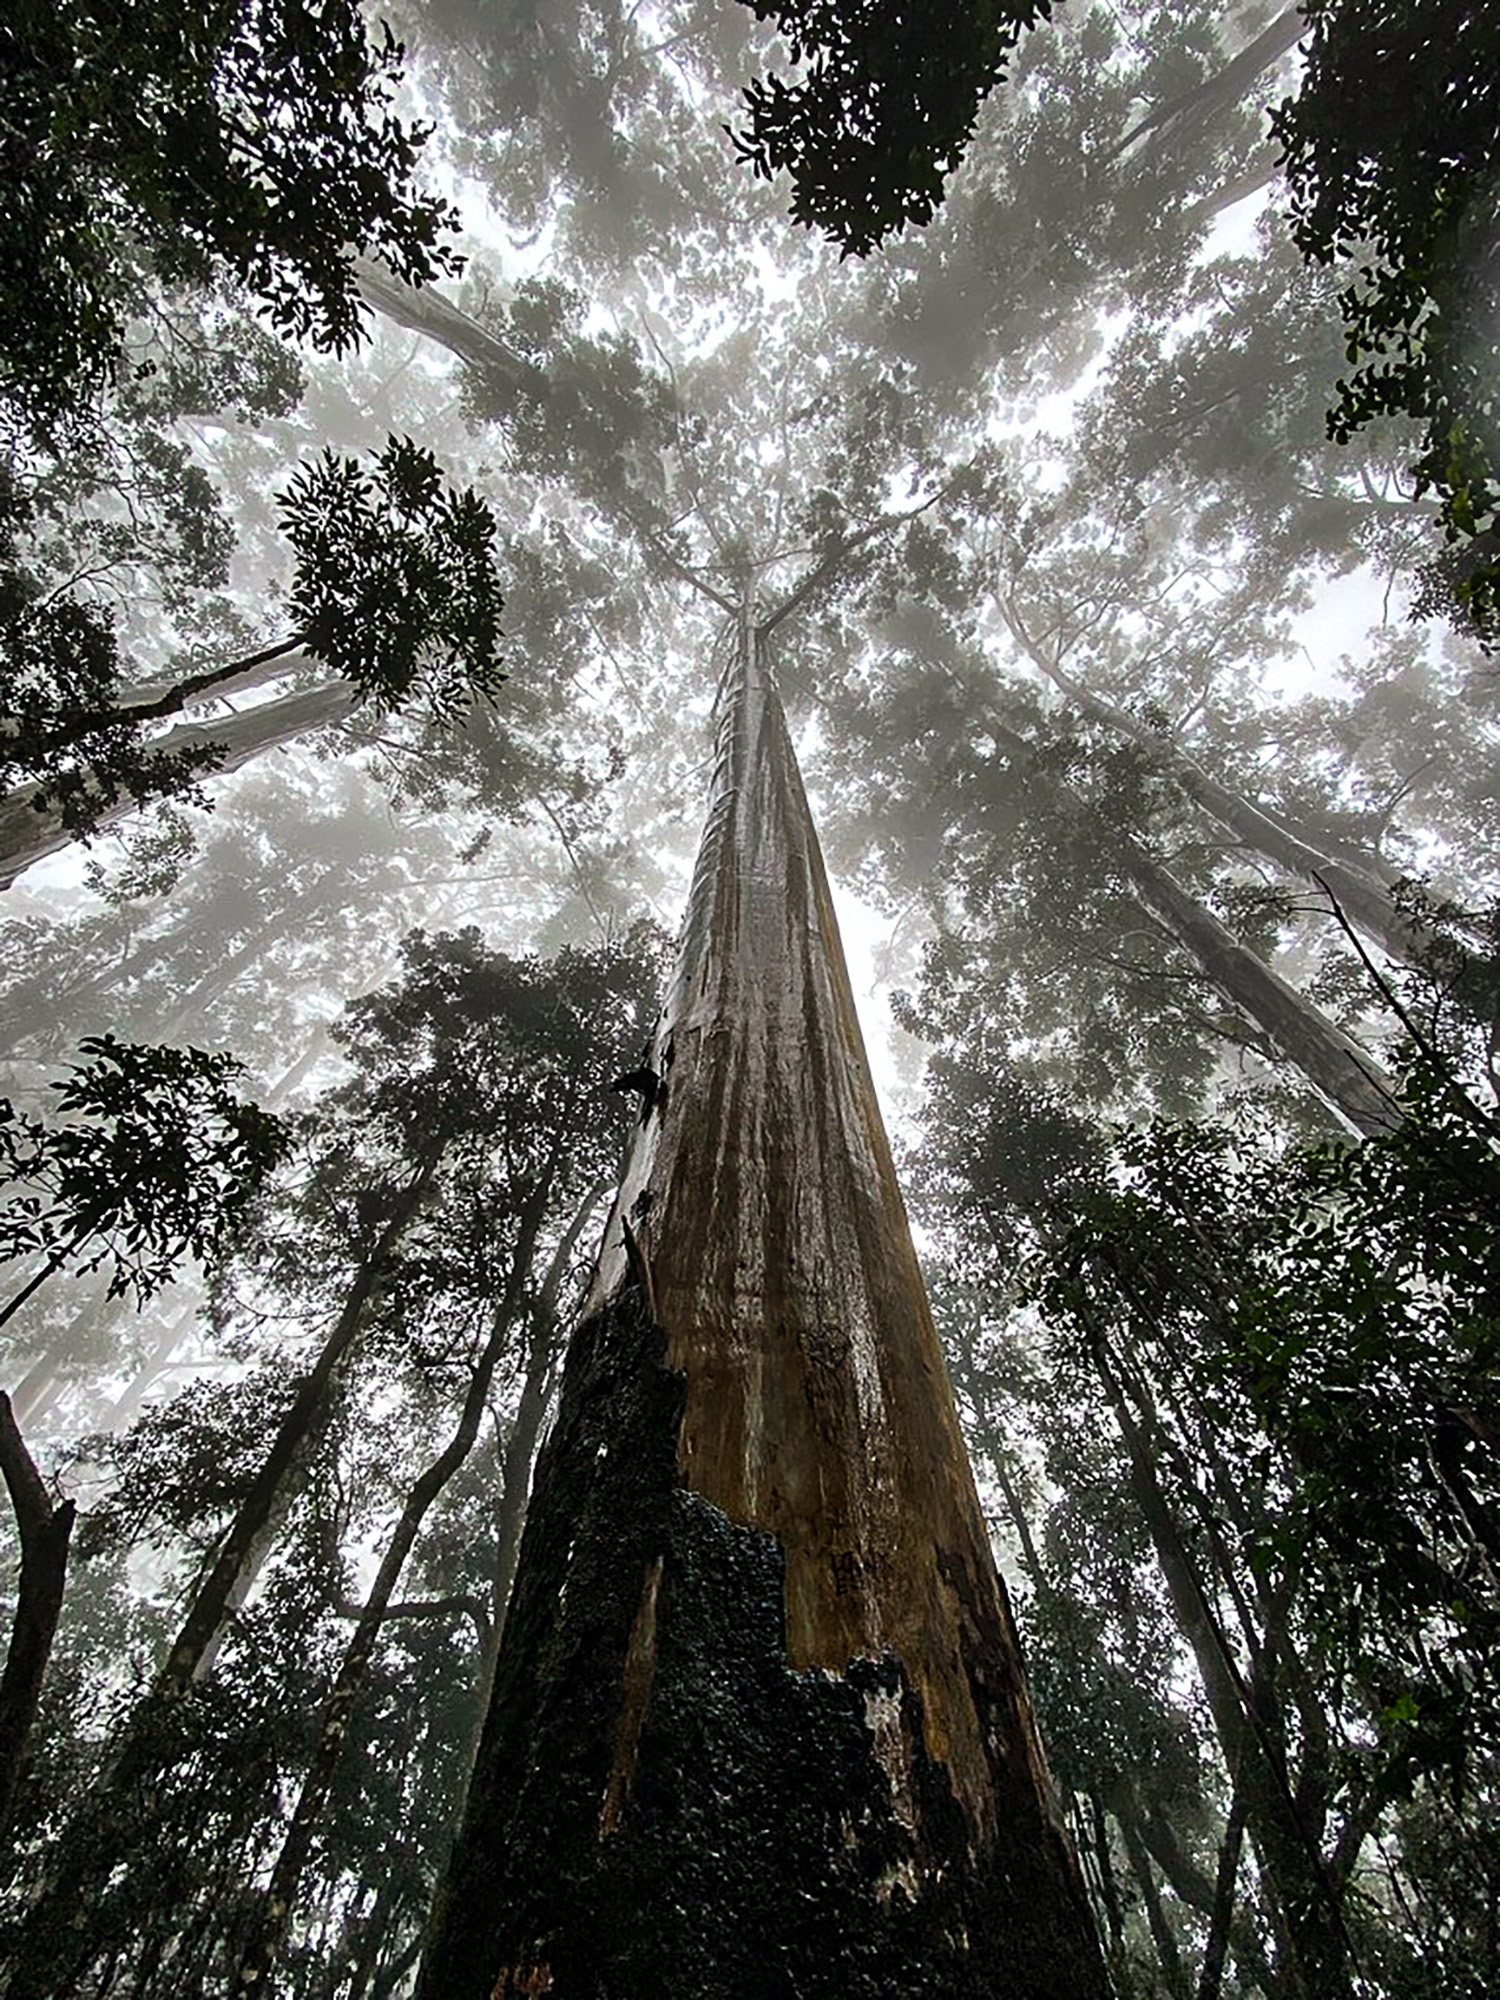 Africa's tallest planted eucaplytus seligna